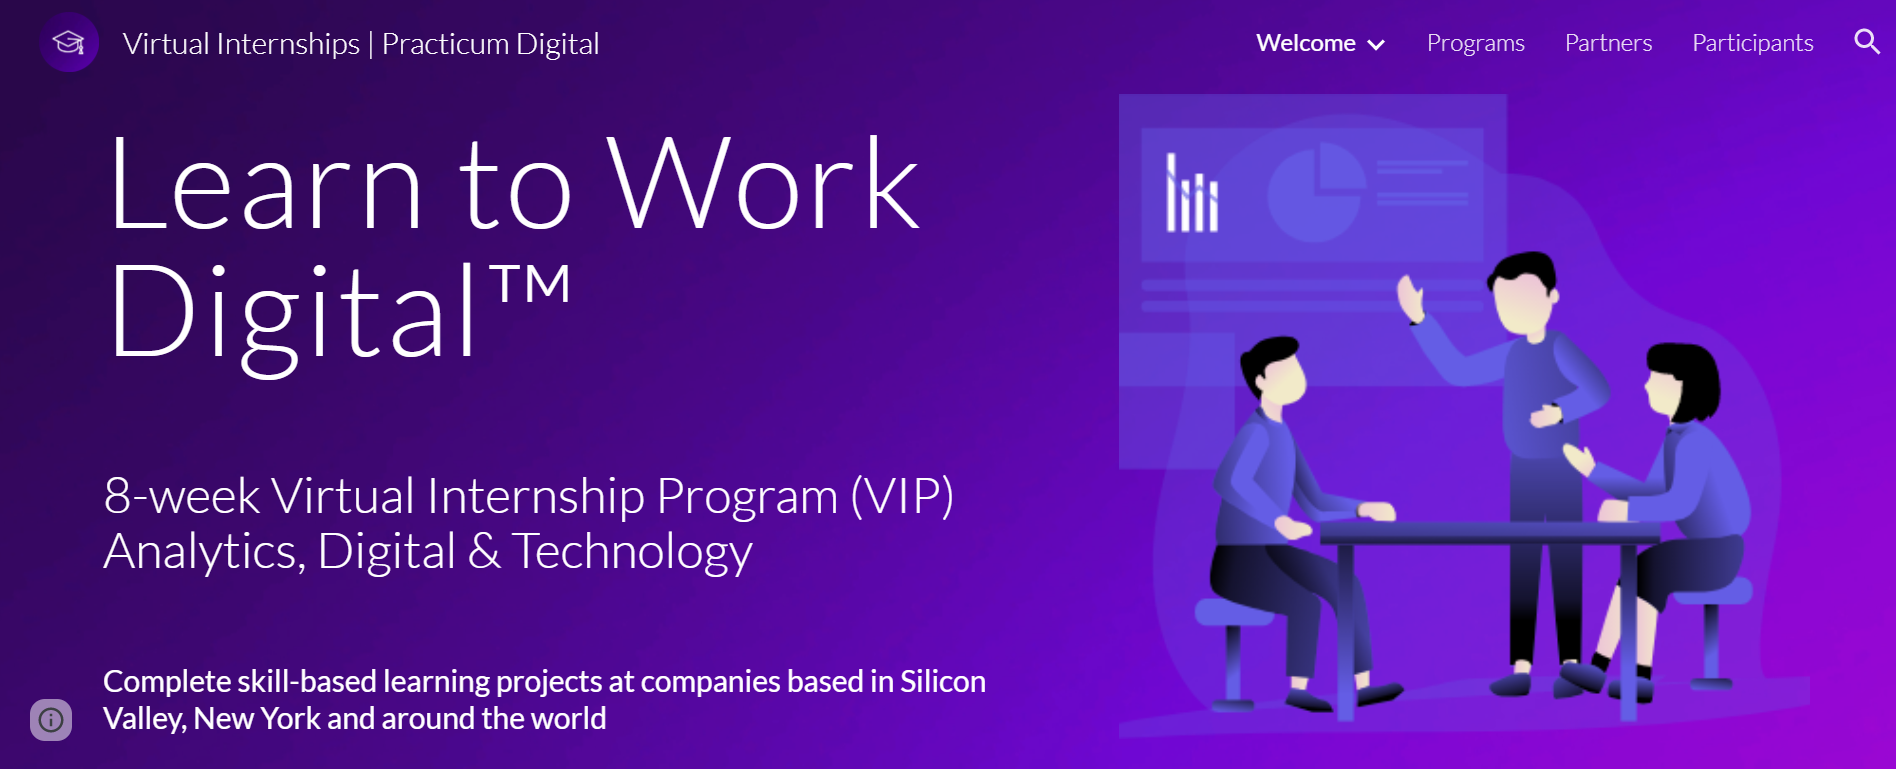 practicum digital virtual internship homepage